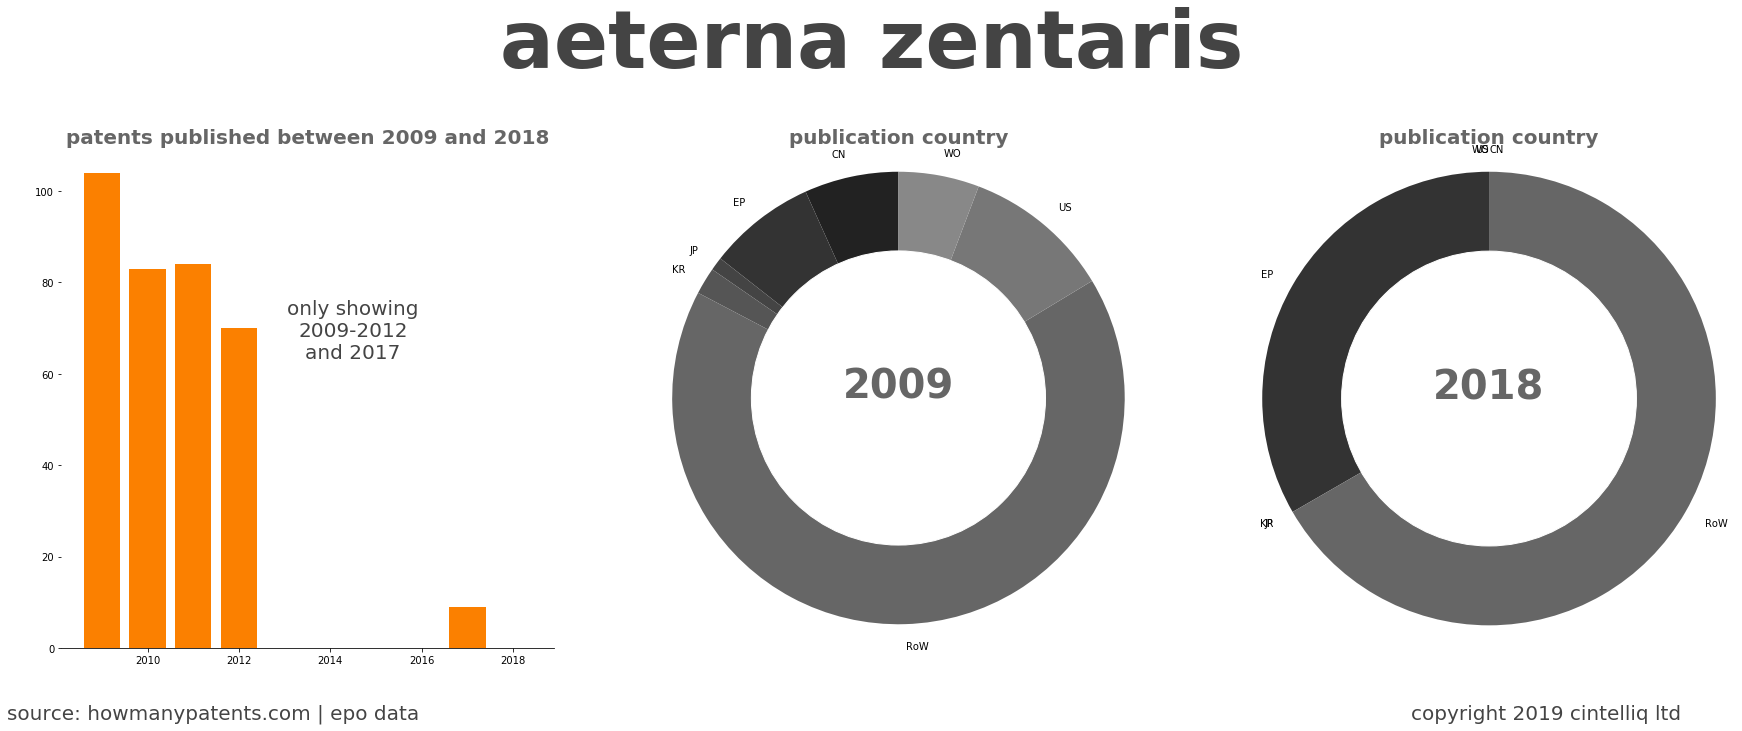 summary of patents for Aeterna Zentaris